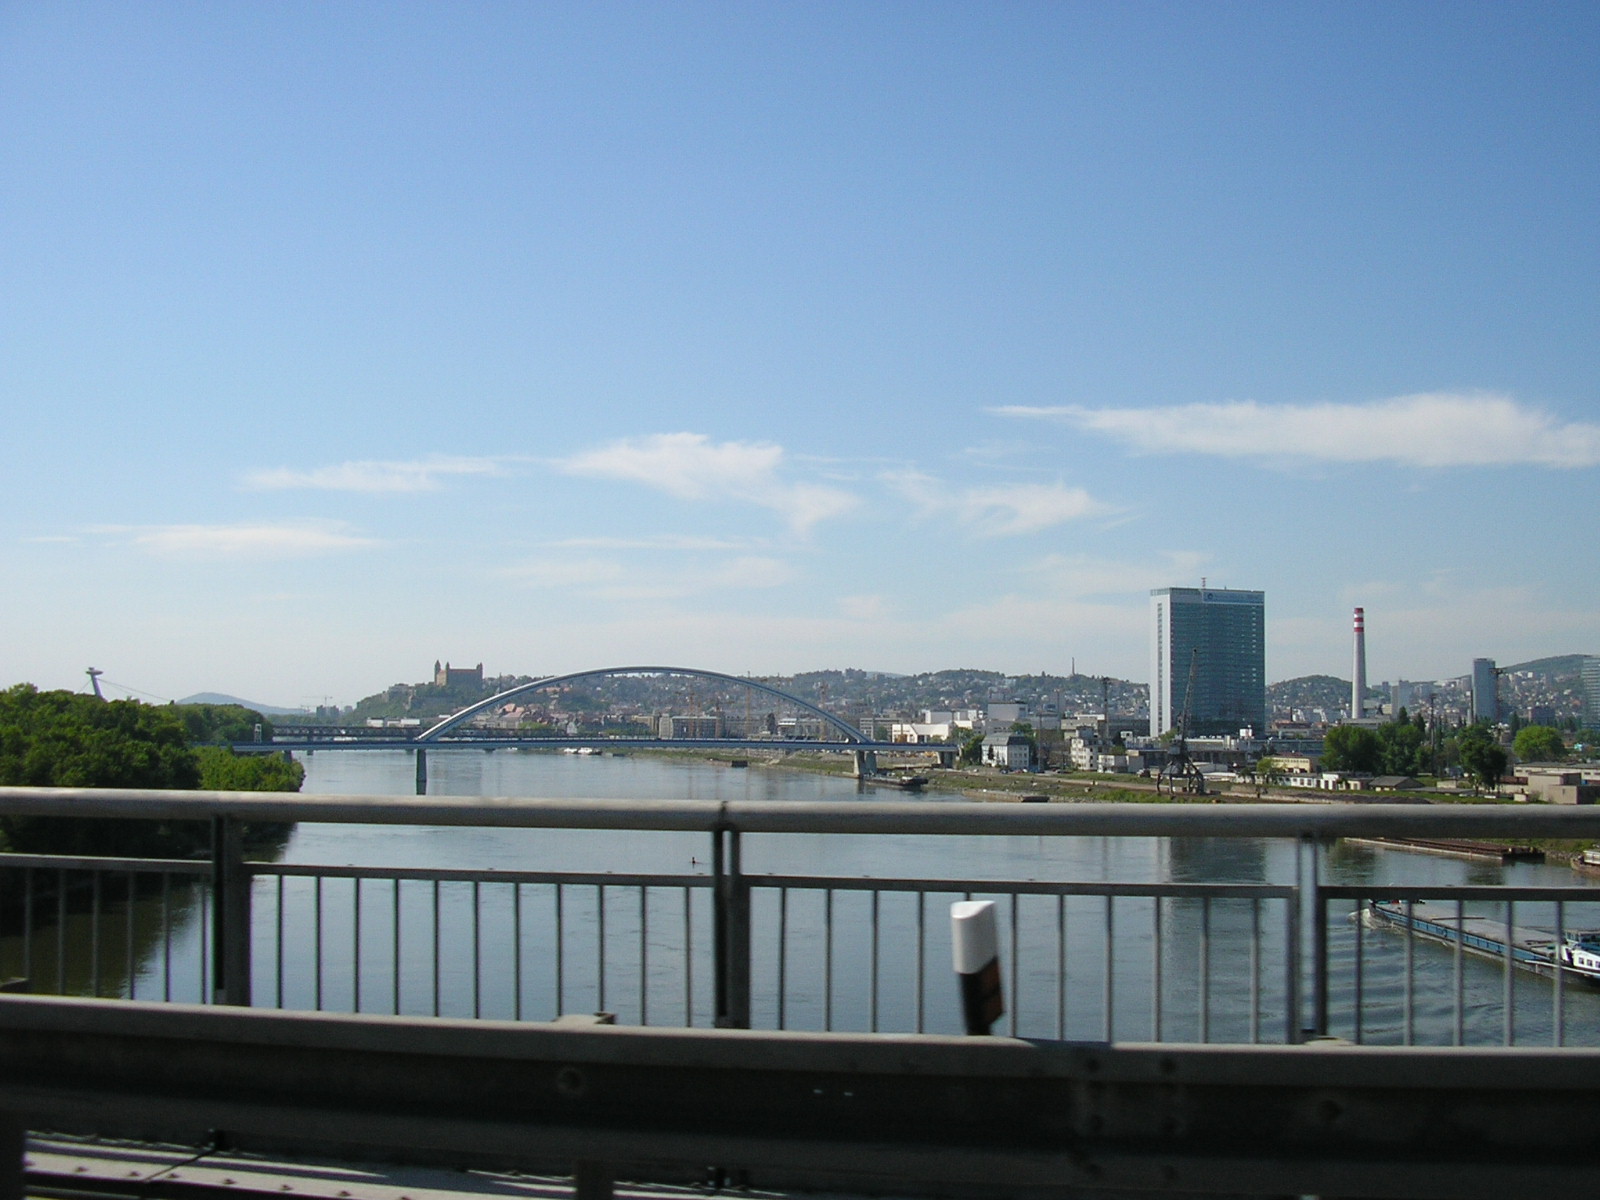 Bratislava z Pristavneho mostu